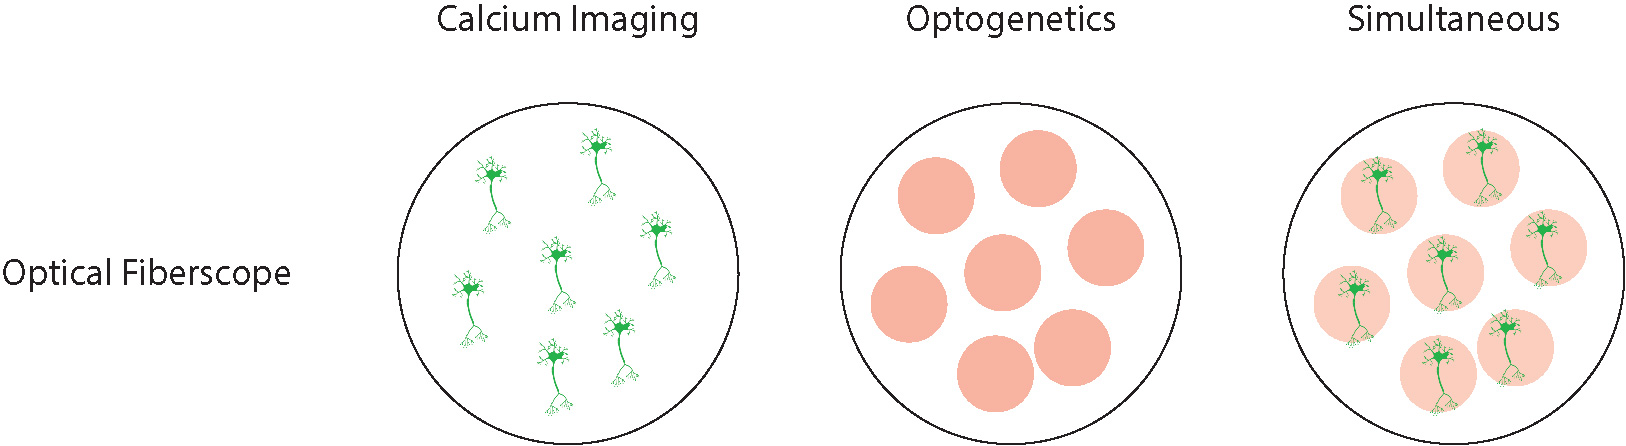 imaging and optogenetics resolution for optical fiberscope